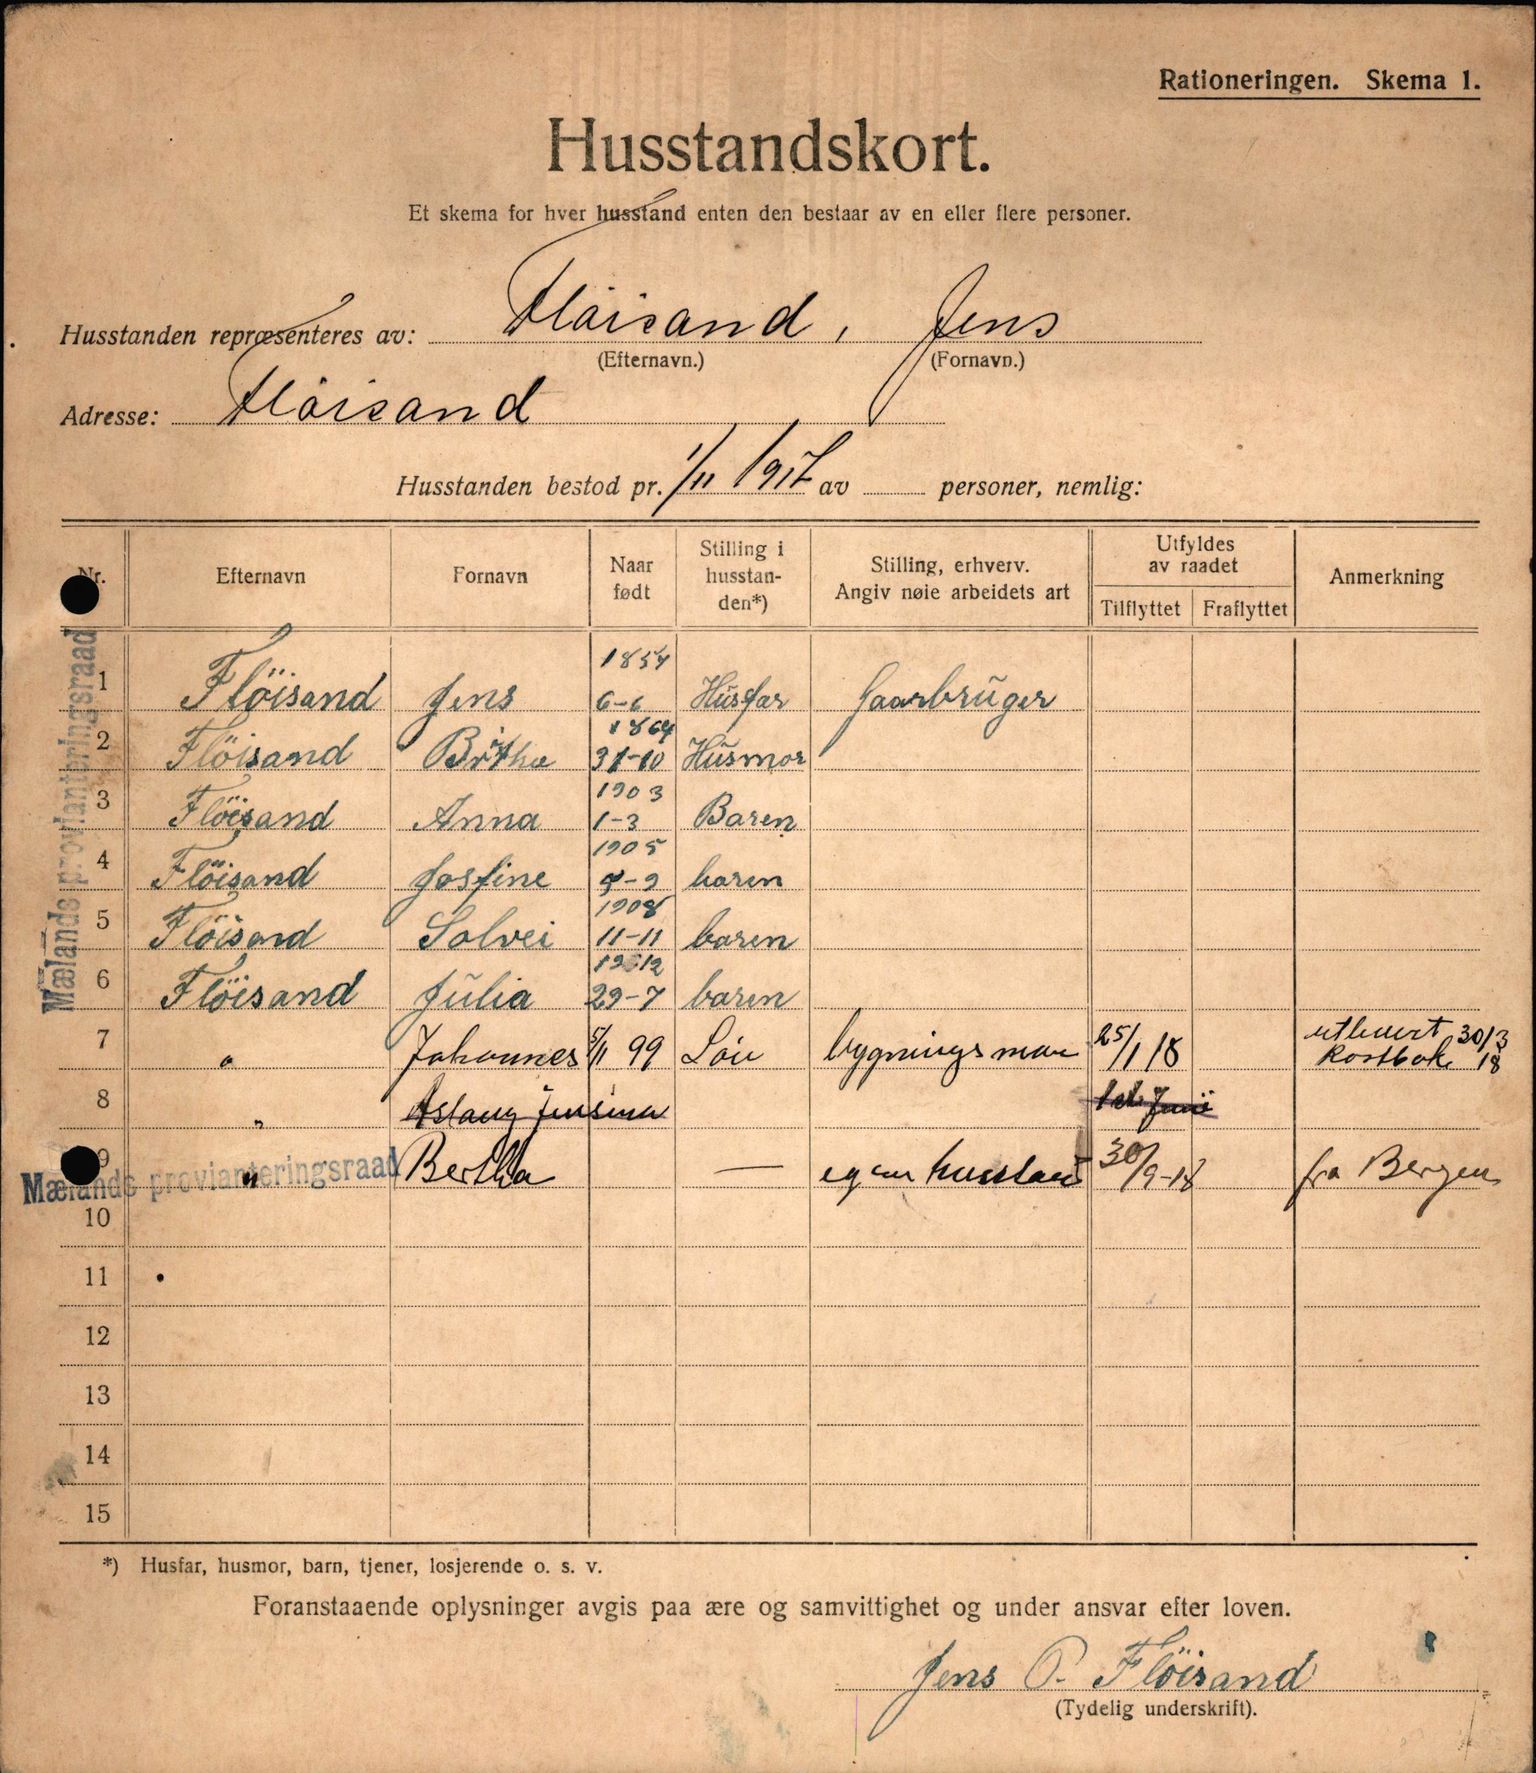 IKAH, Meland kommune, Provianteringsrådet, Husstander per 01.11.1917, 1917-1918, s. 48